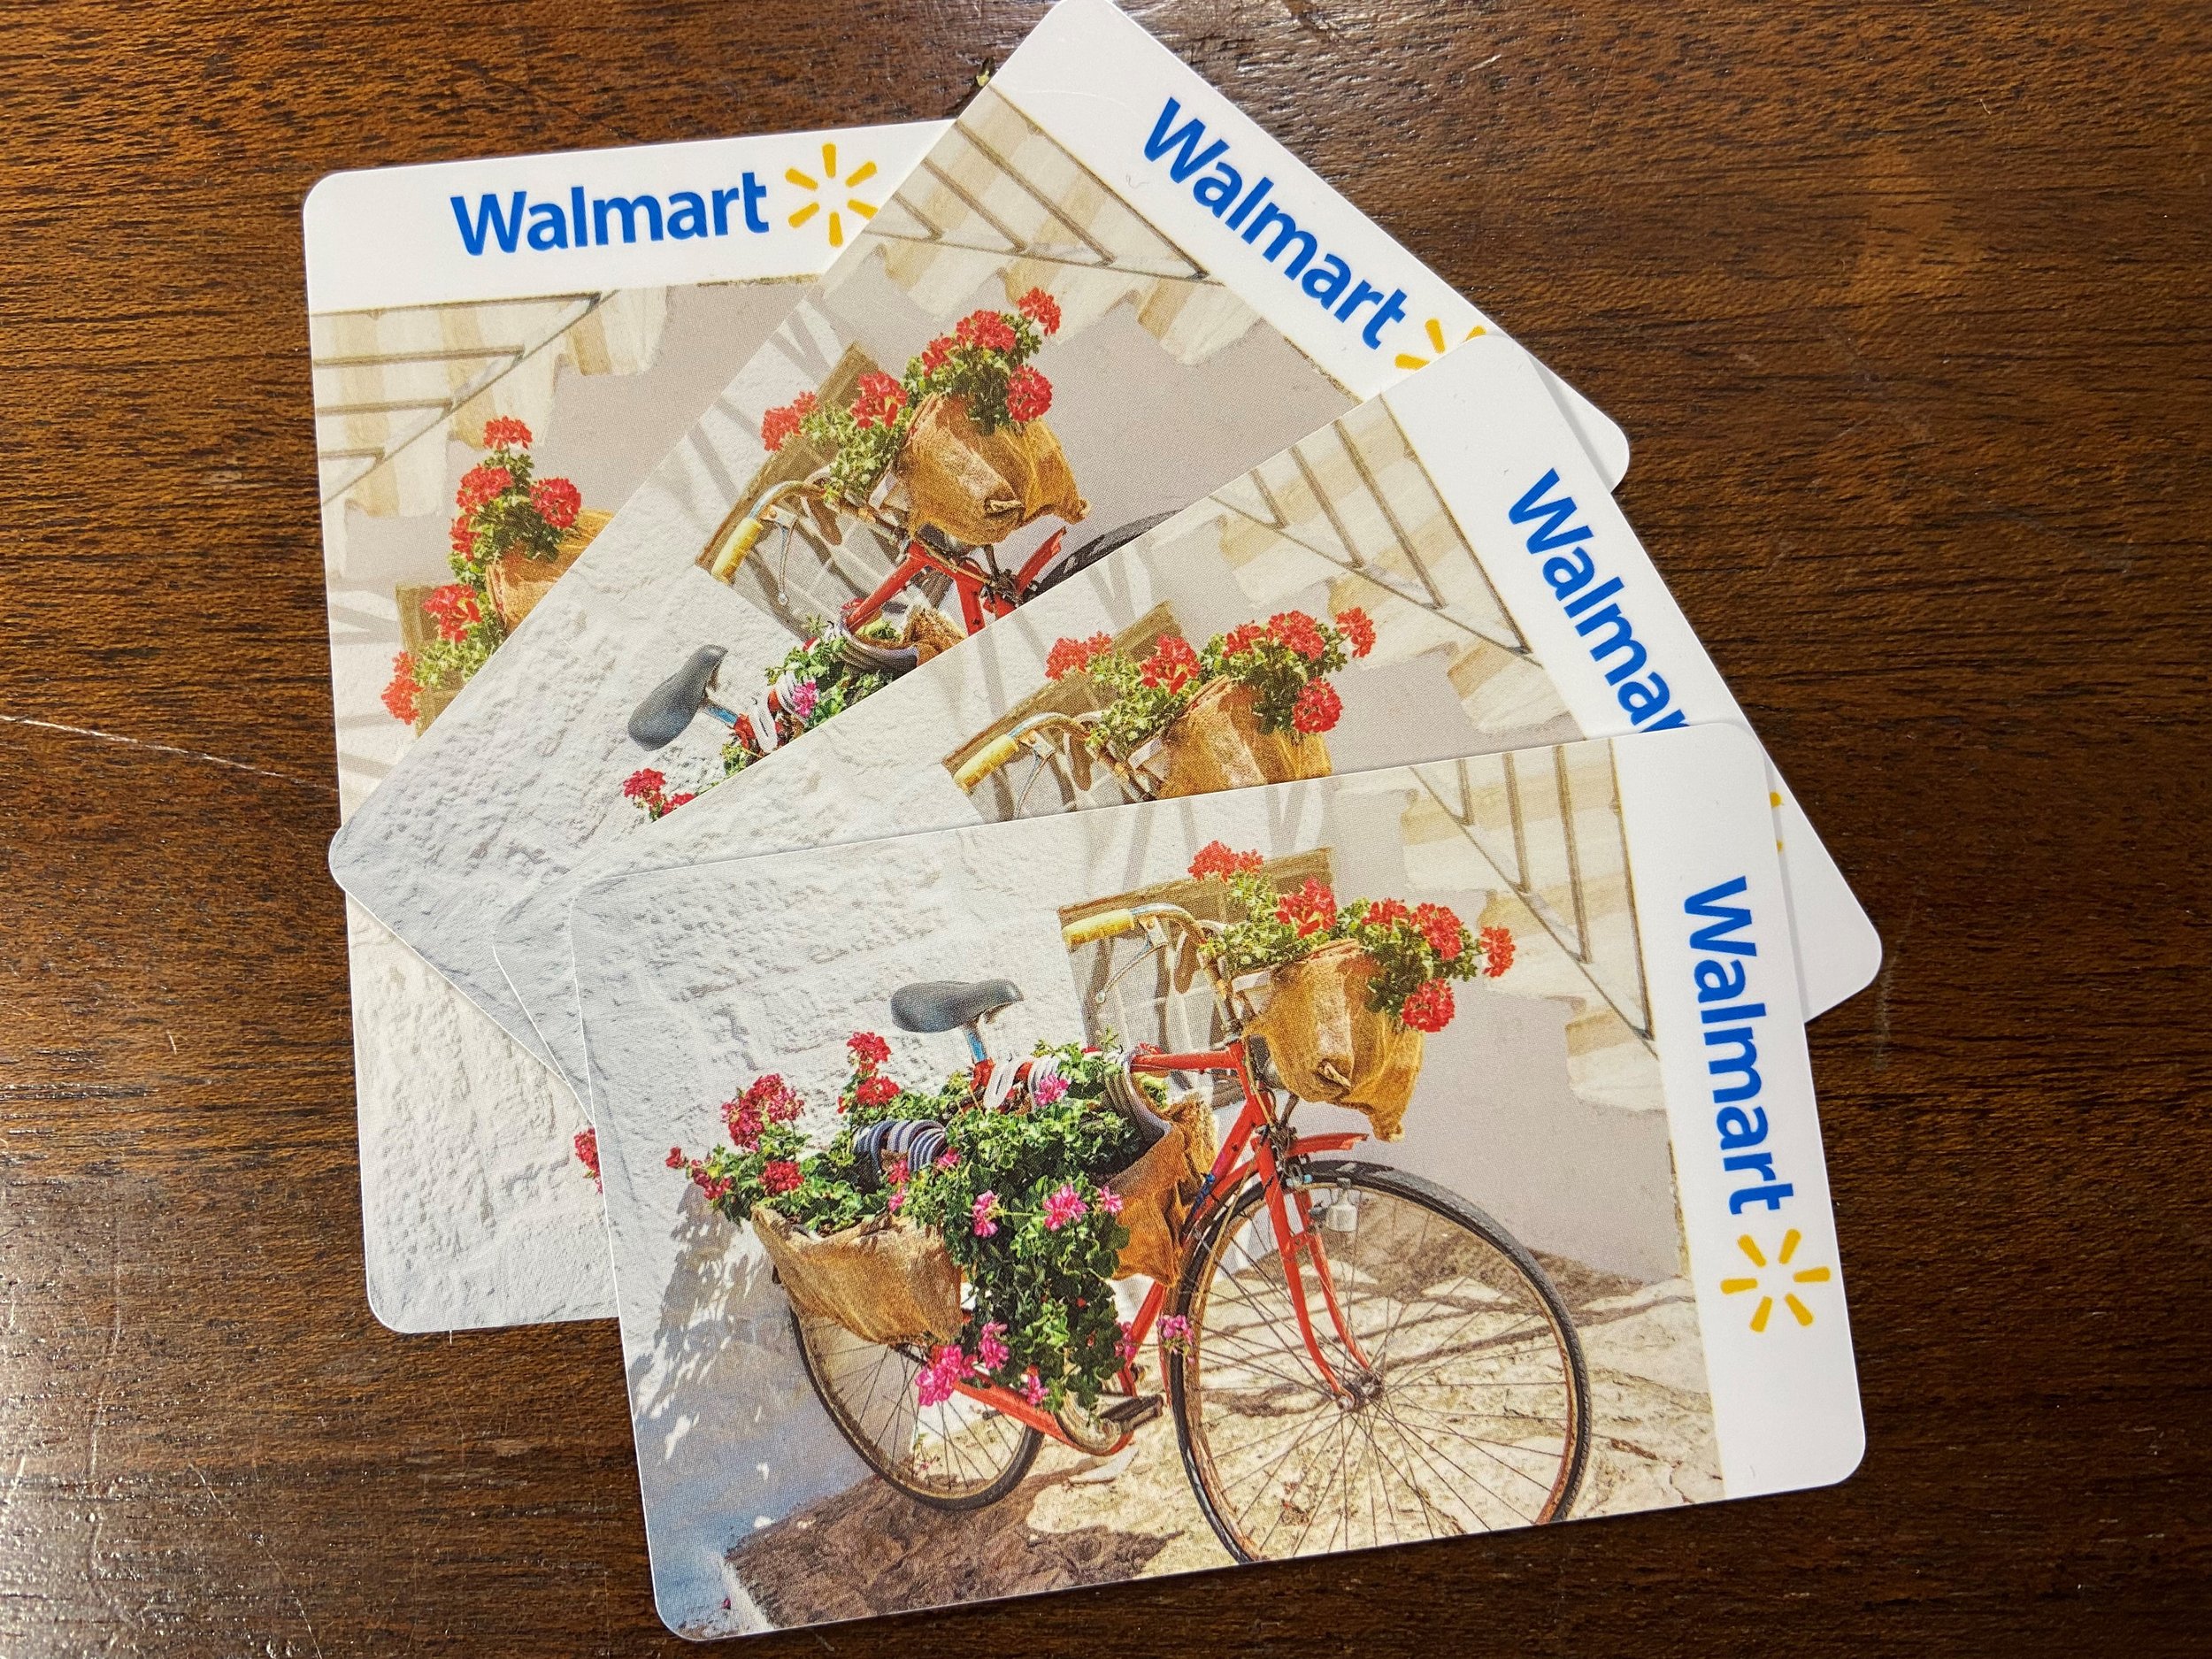 walmart gift cards horizontal.jpg